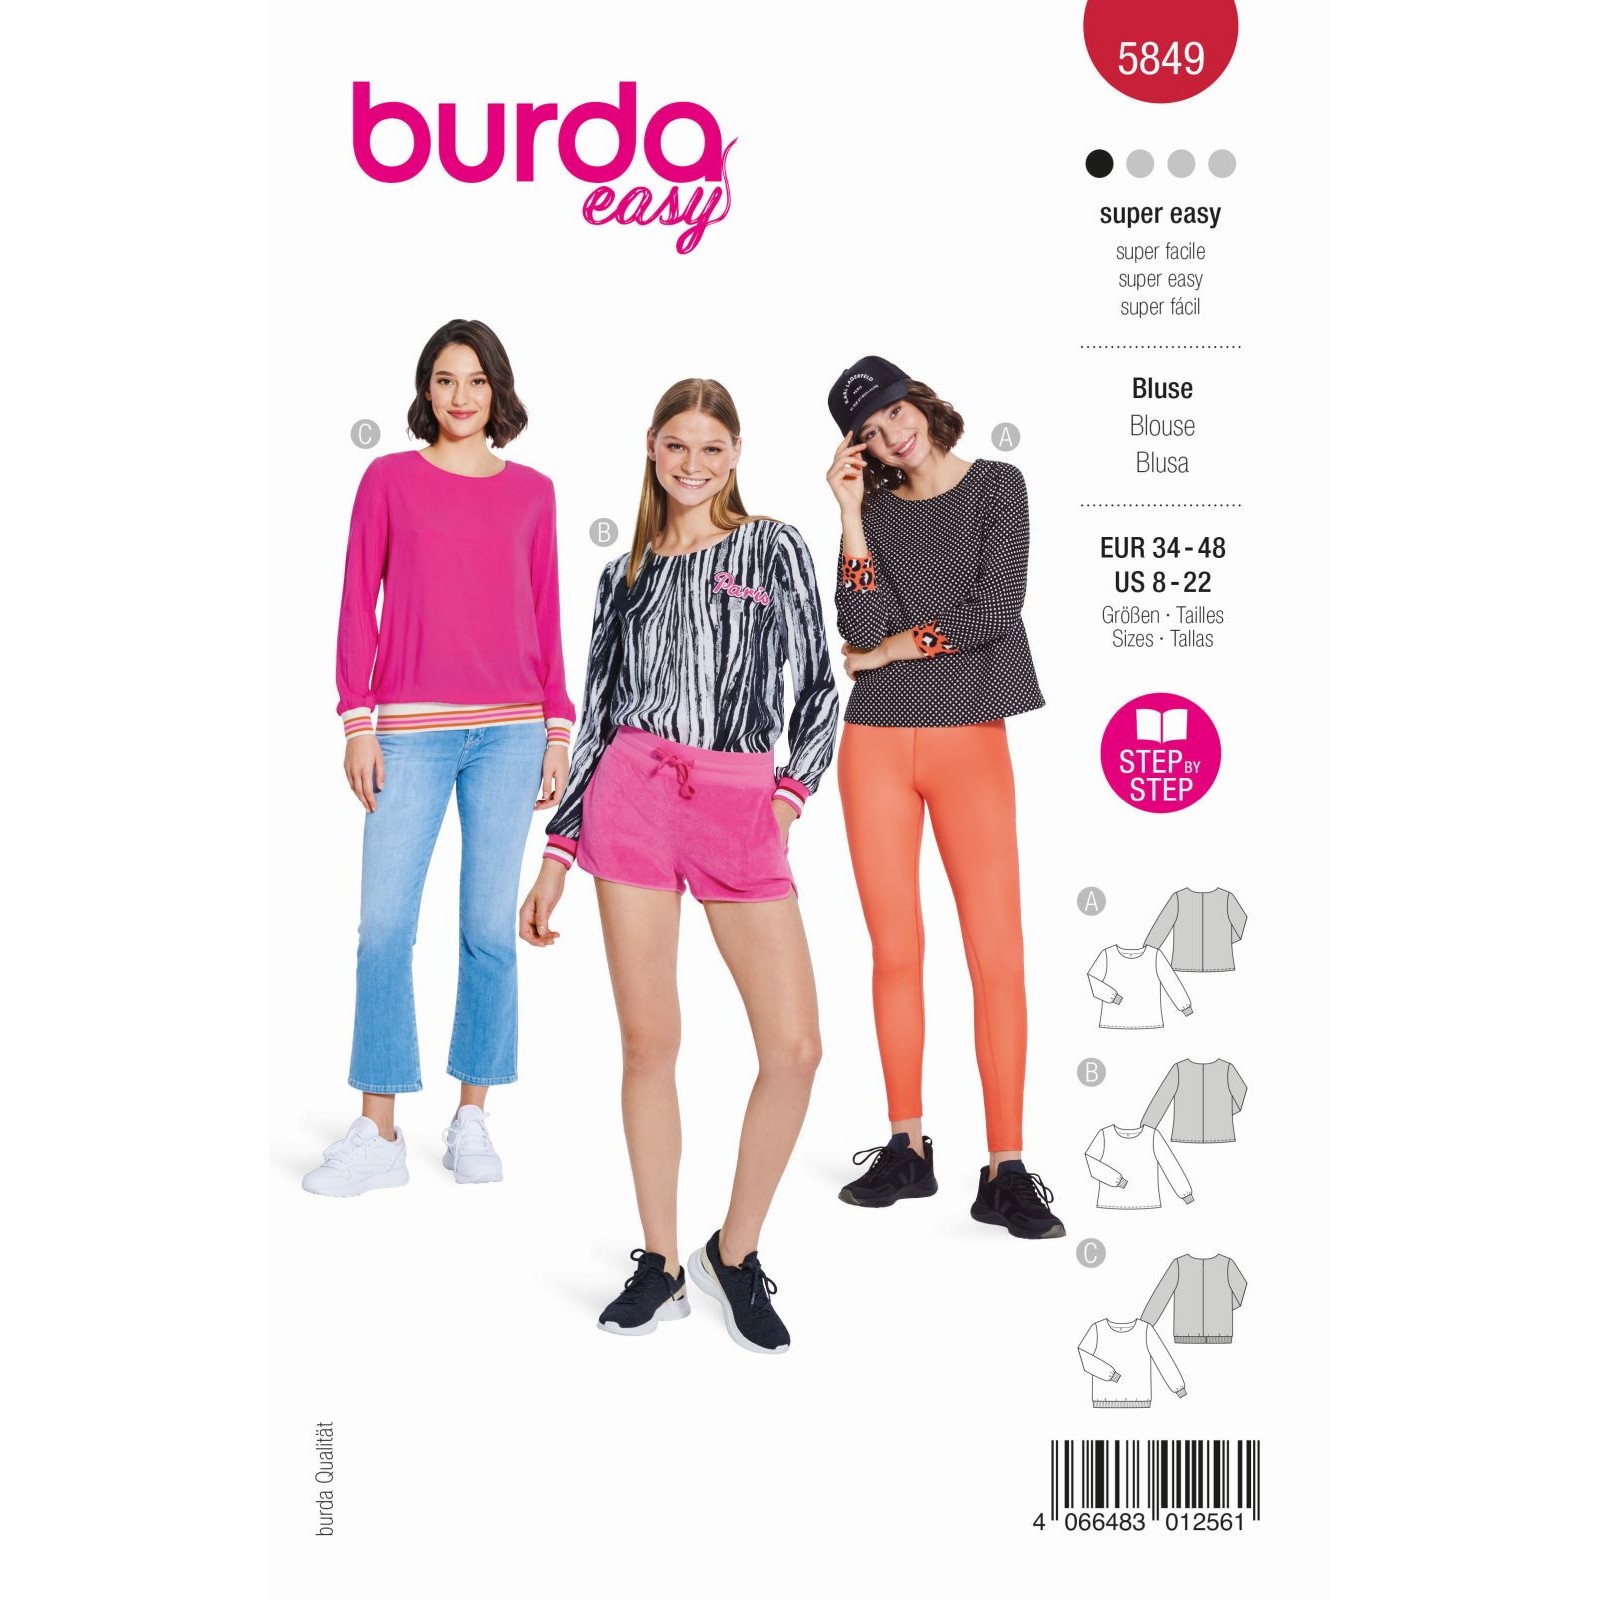 Burda Rood 5849 - Shirt in Variaties